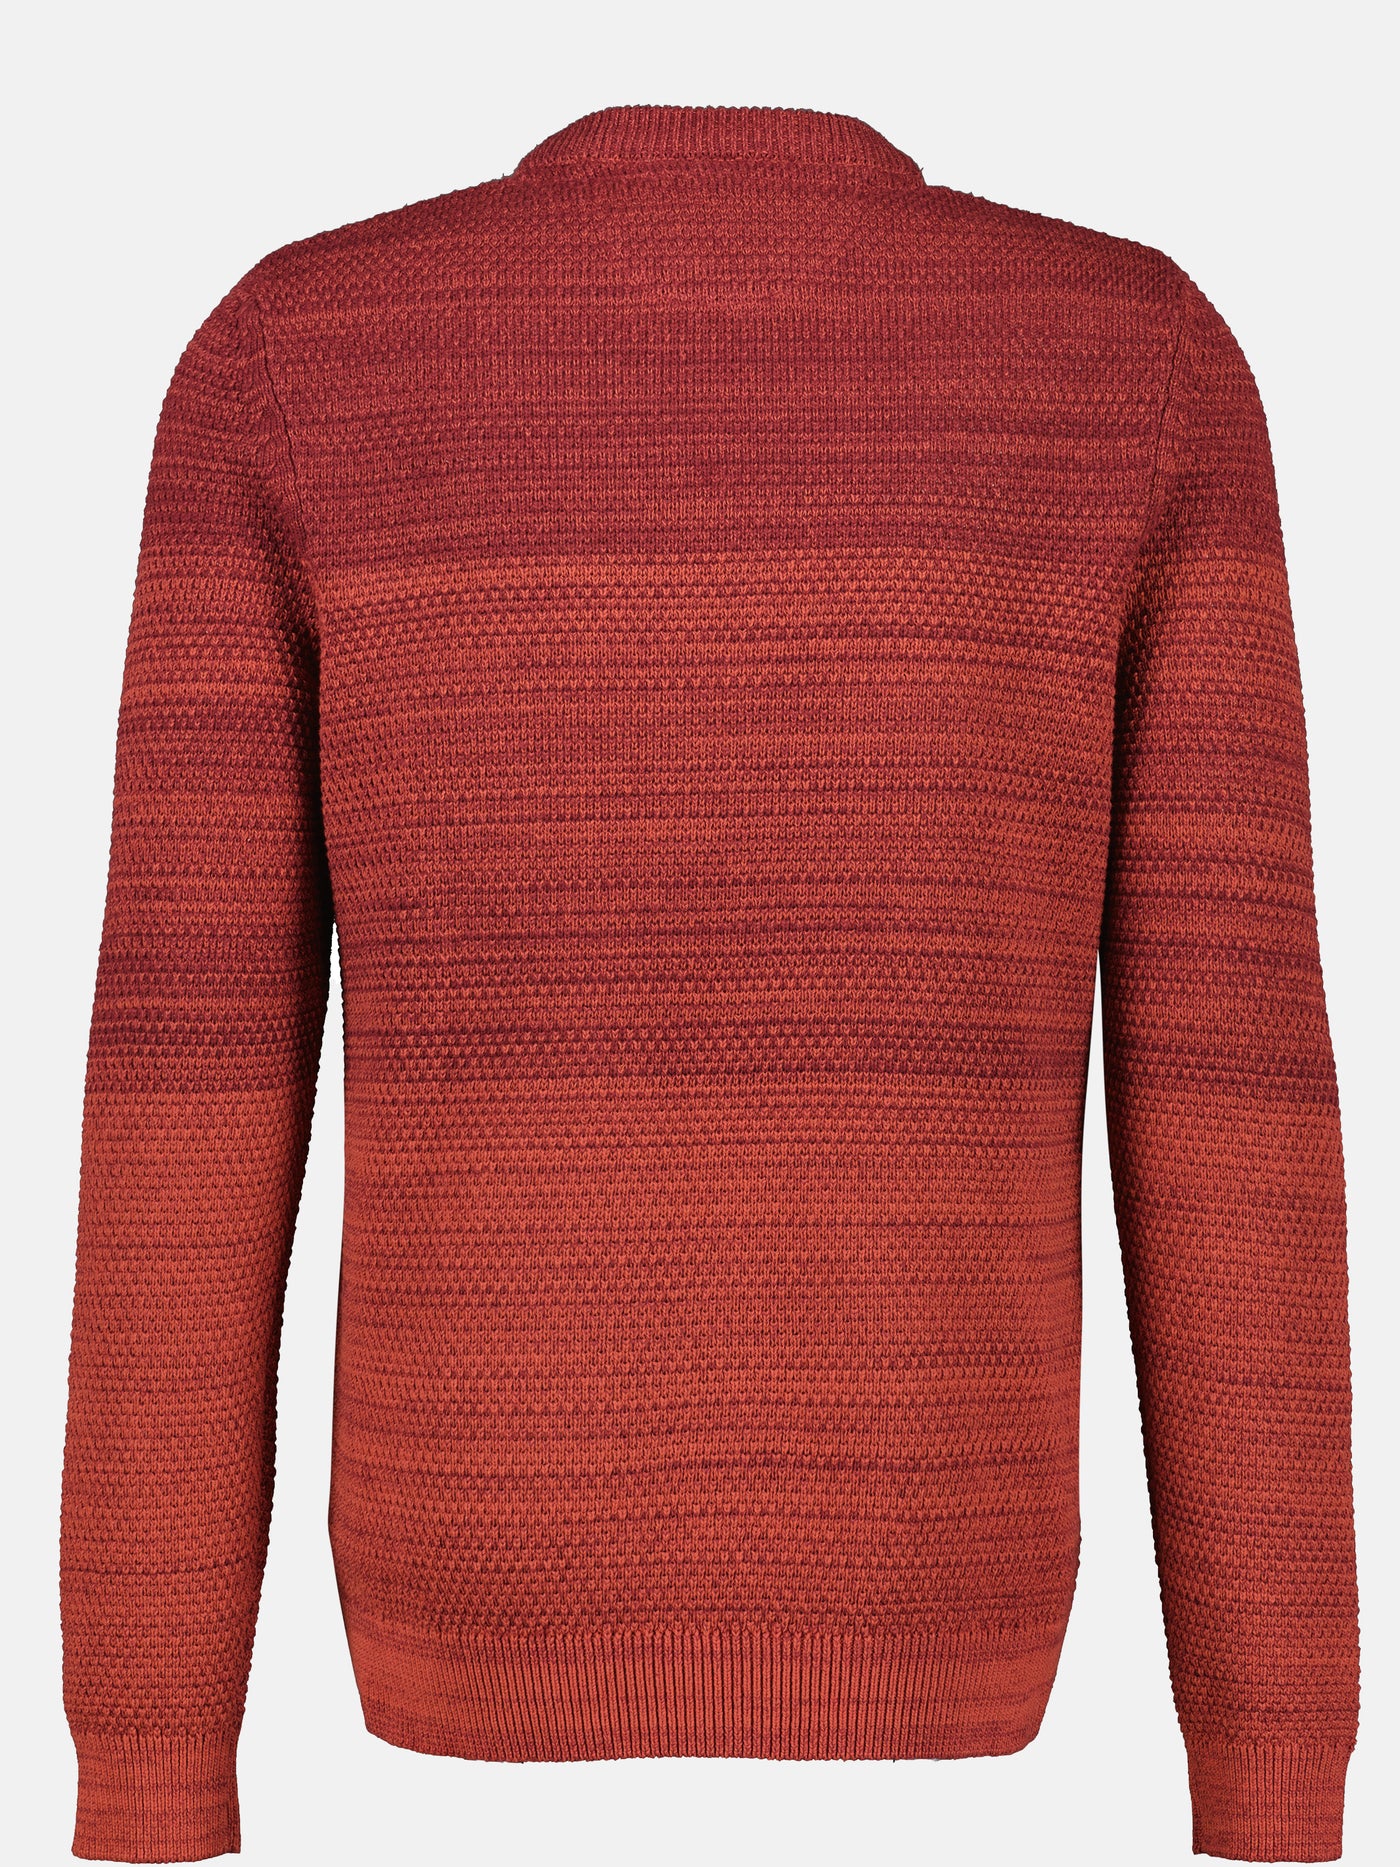 Crewneck, gradient striped knit pattern